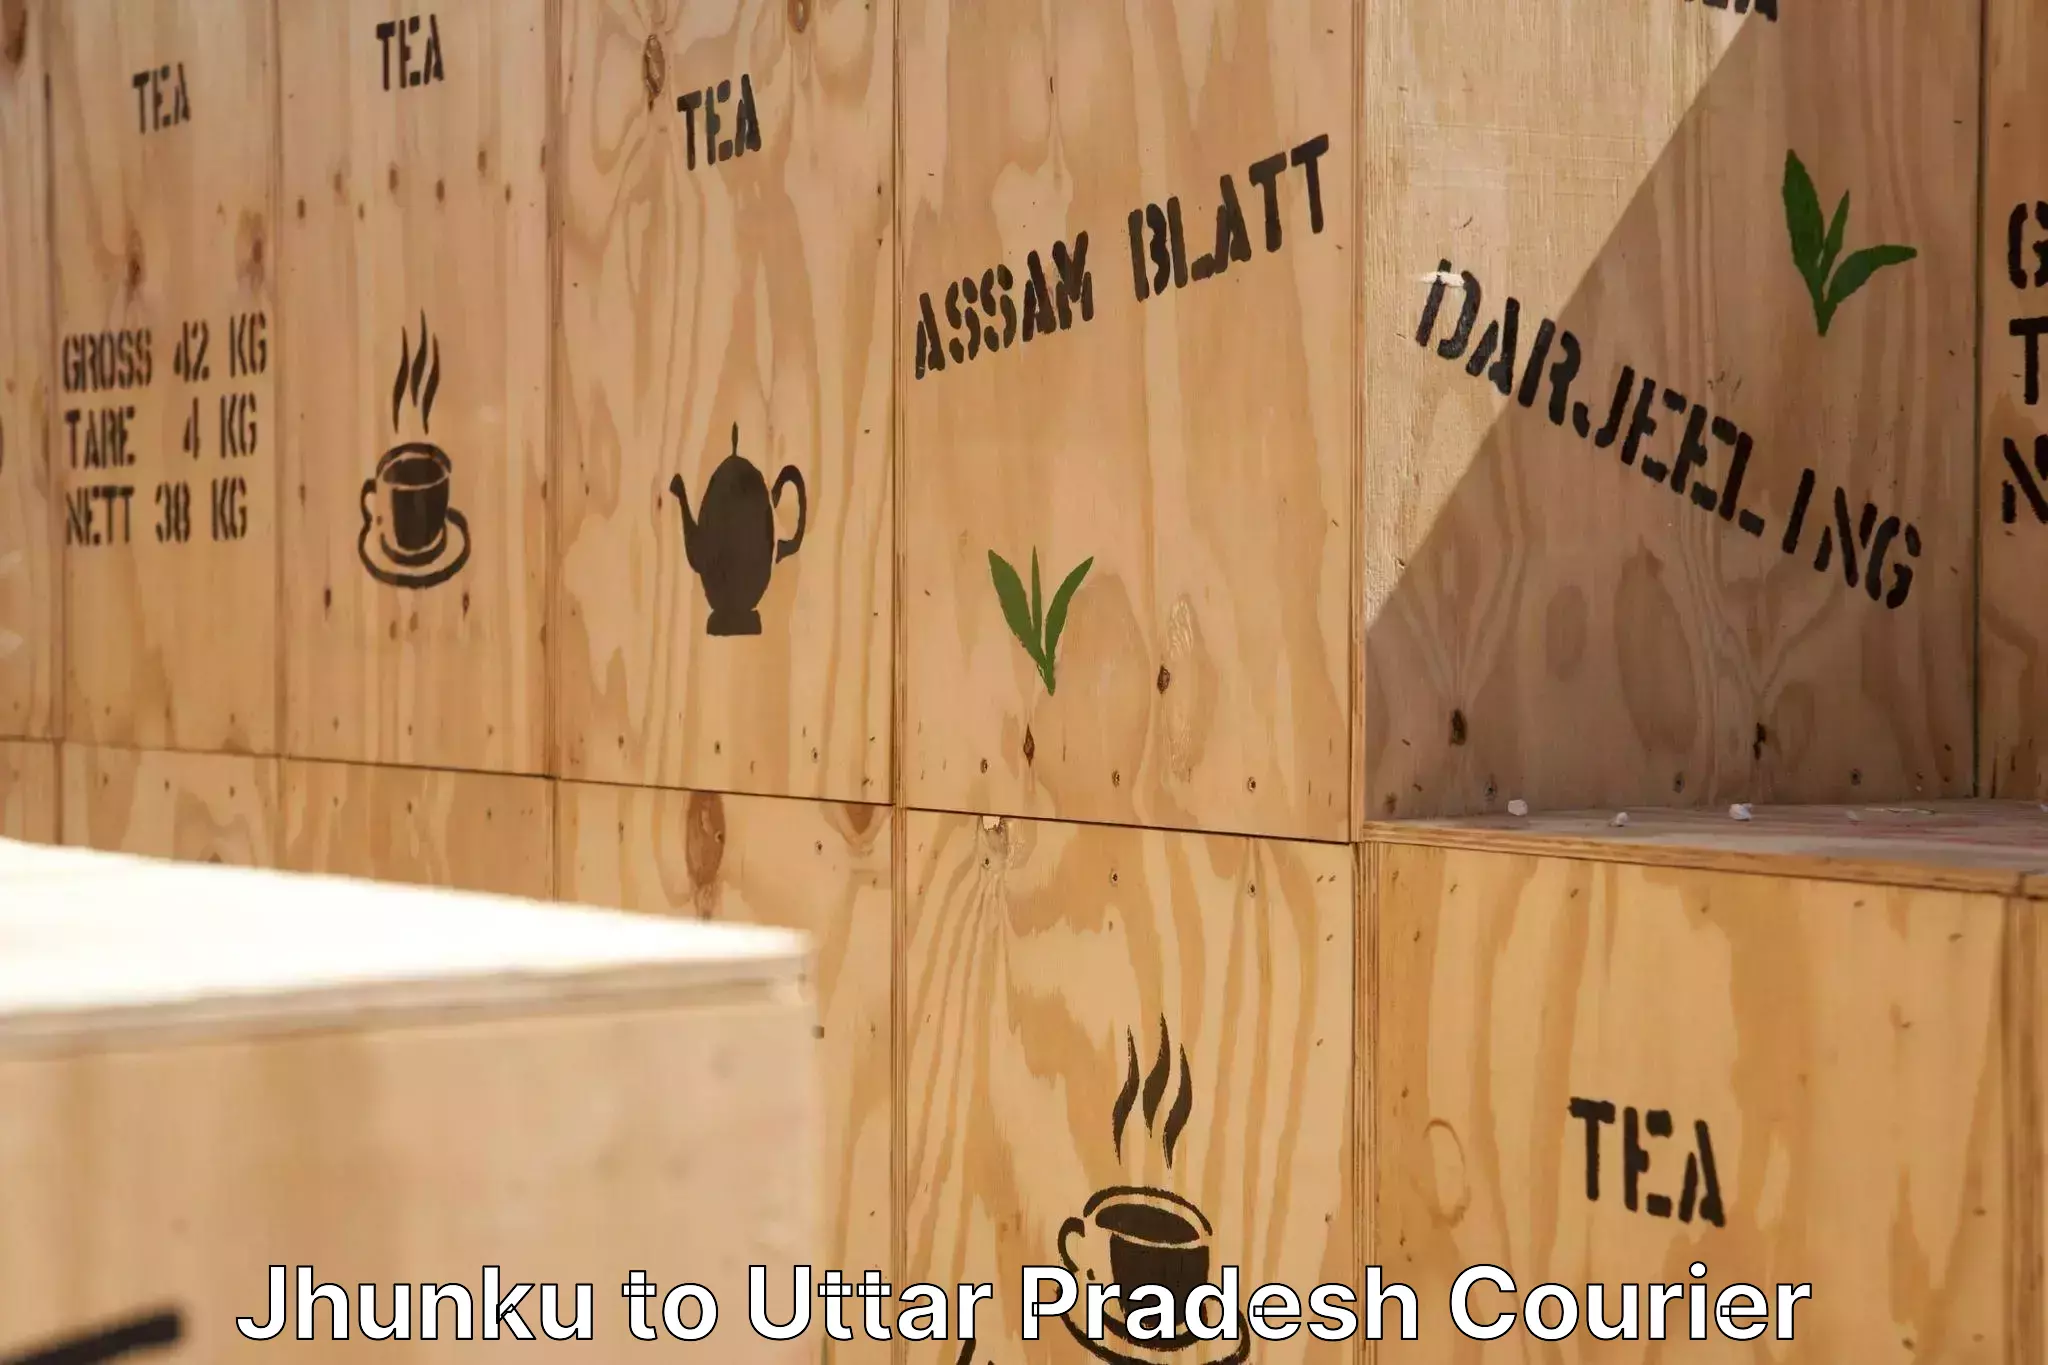 Efficient moving strategies Jhunku to Uttar Pradesh